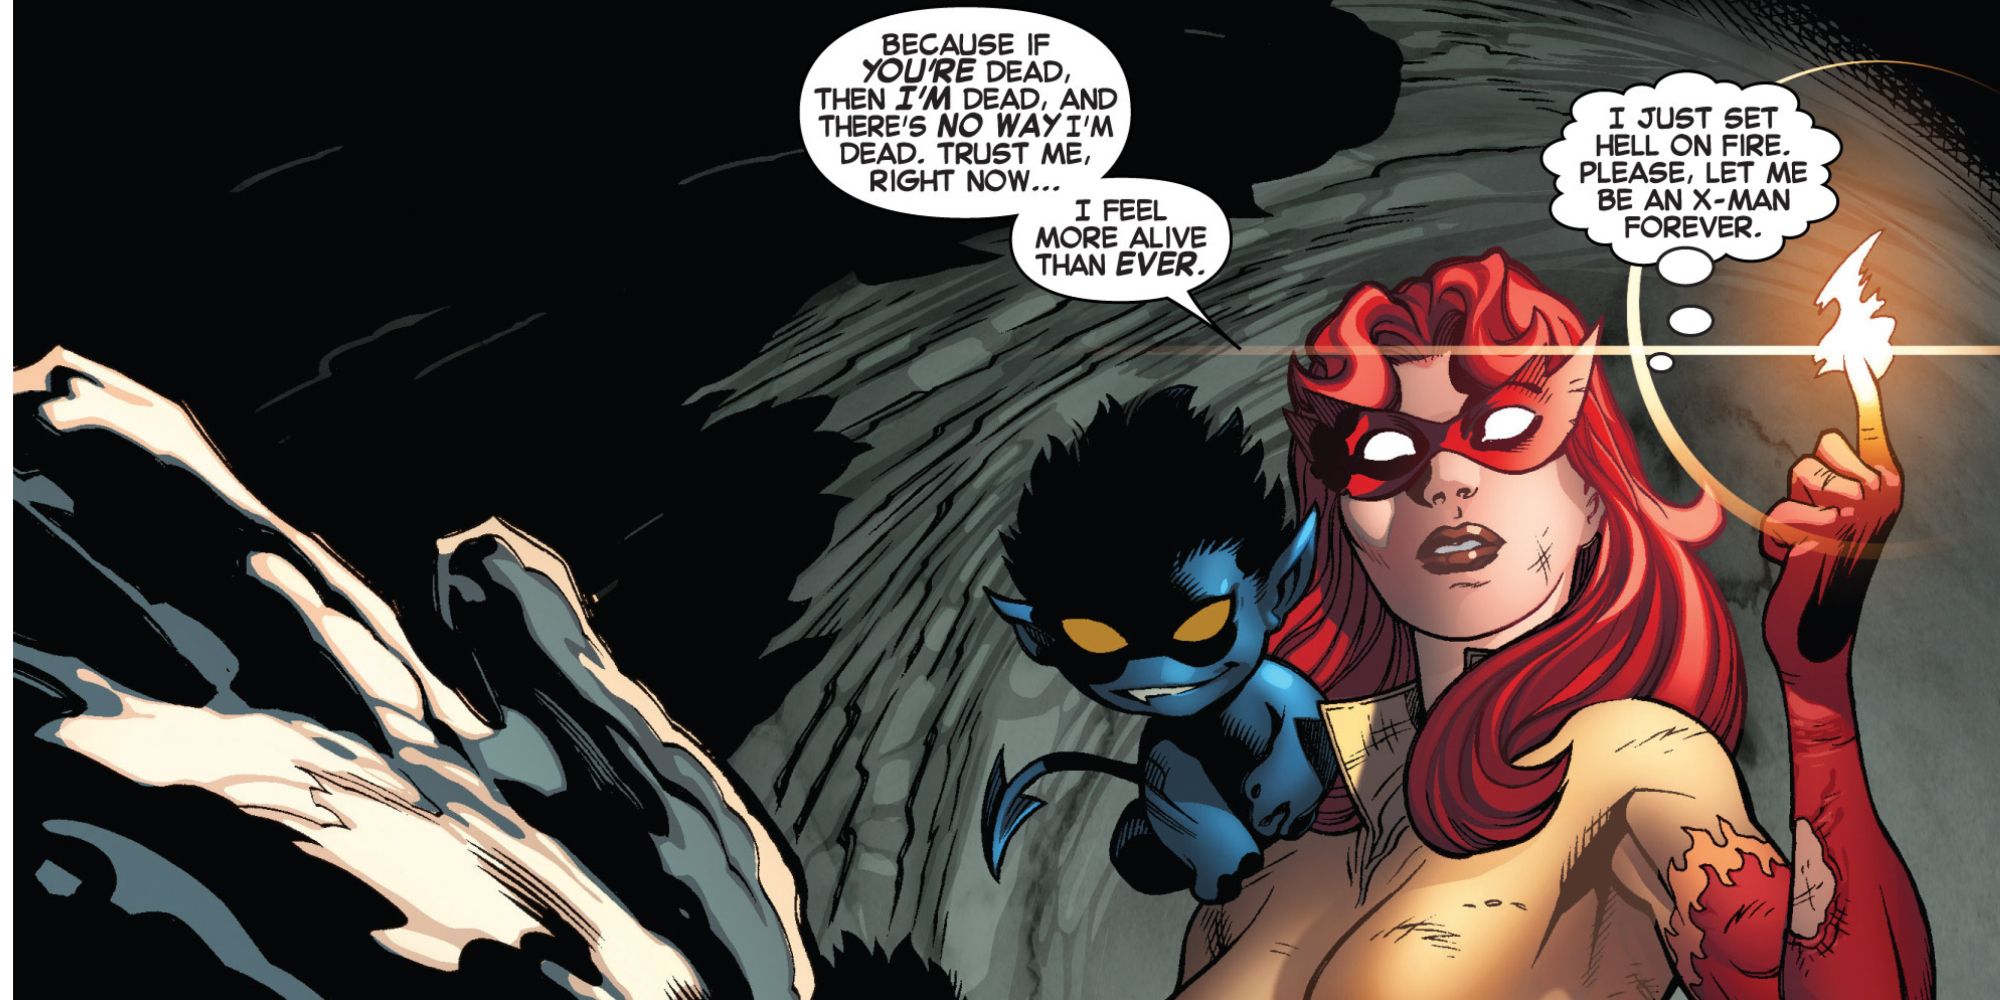 Firestar sets Hell on fire in Marvel Comics.